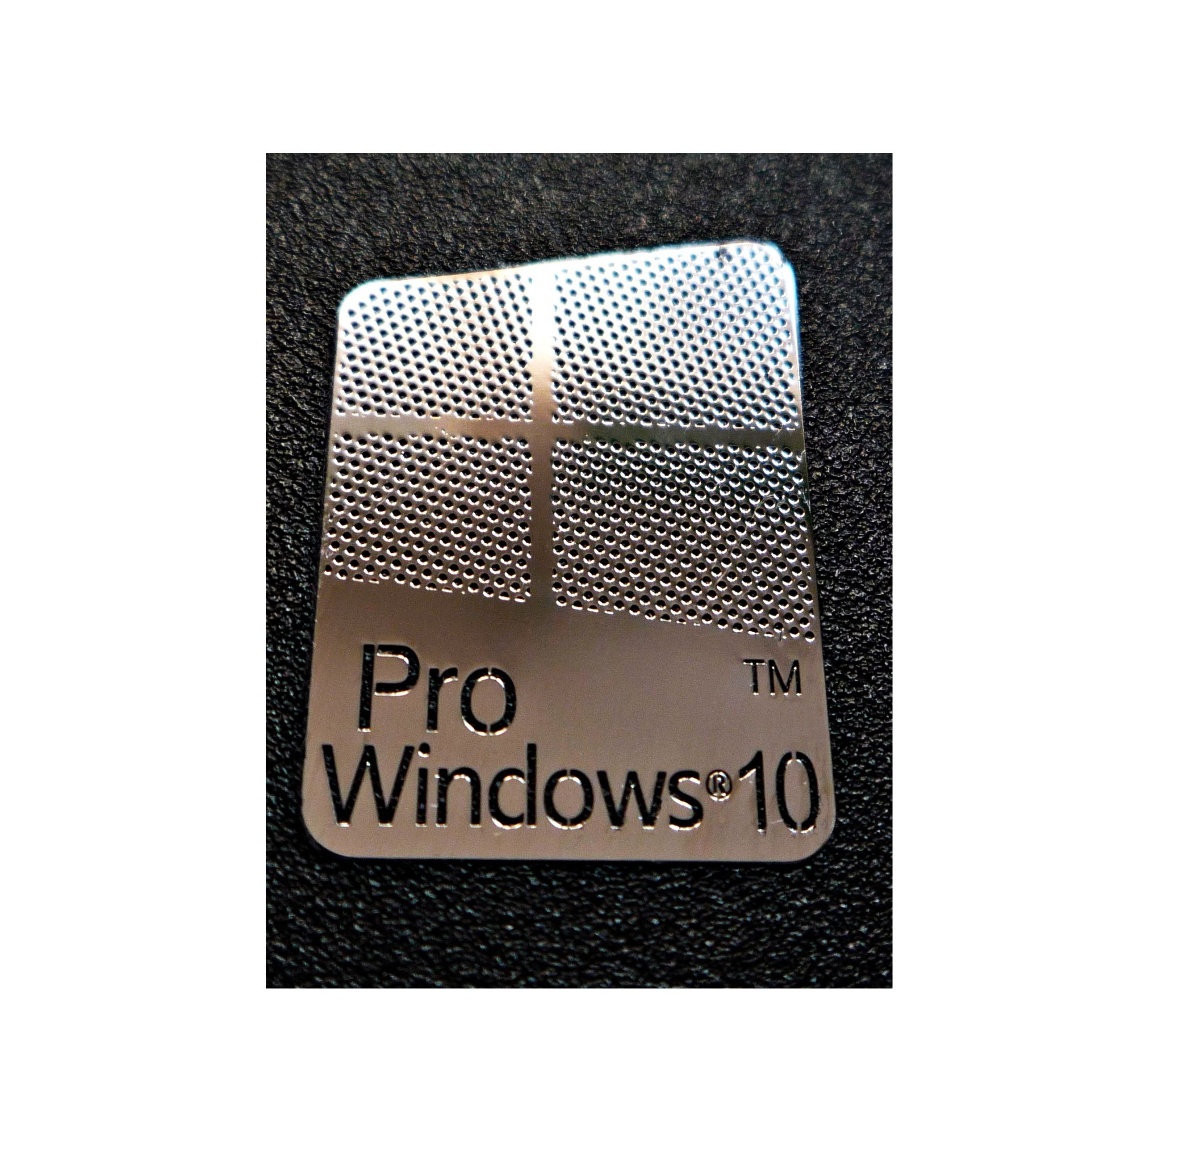 Windows10 Pro nalepka Metal Edition 16x23mm CHROM